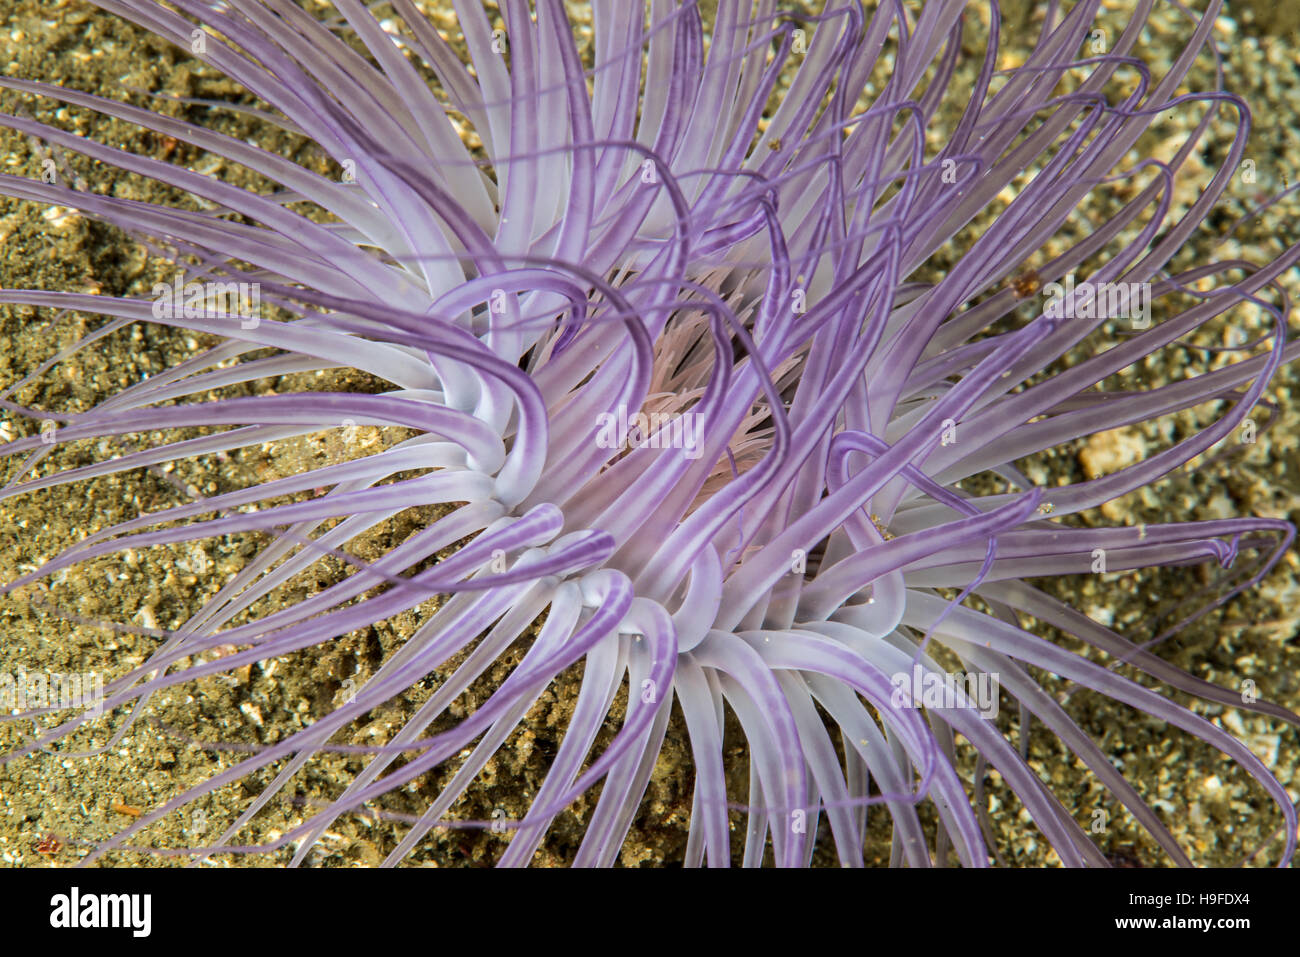 a tube-dwelling anemone, Pachycerianthus magnus (Nakamoto 1919). sandy bottom, Owase, Mie, Japan. Depth 18m. Stock Photo